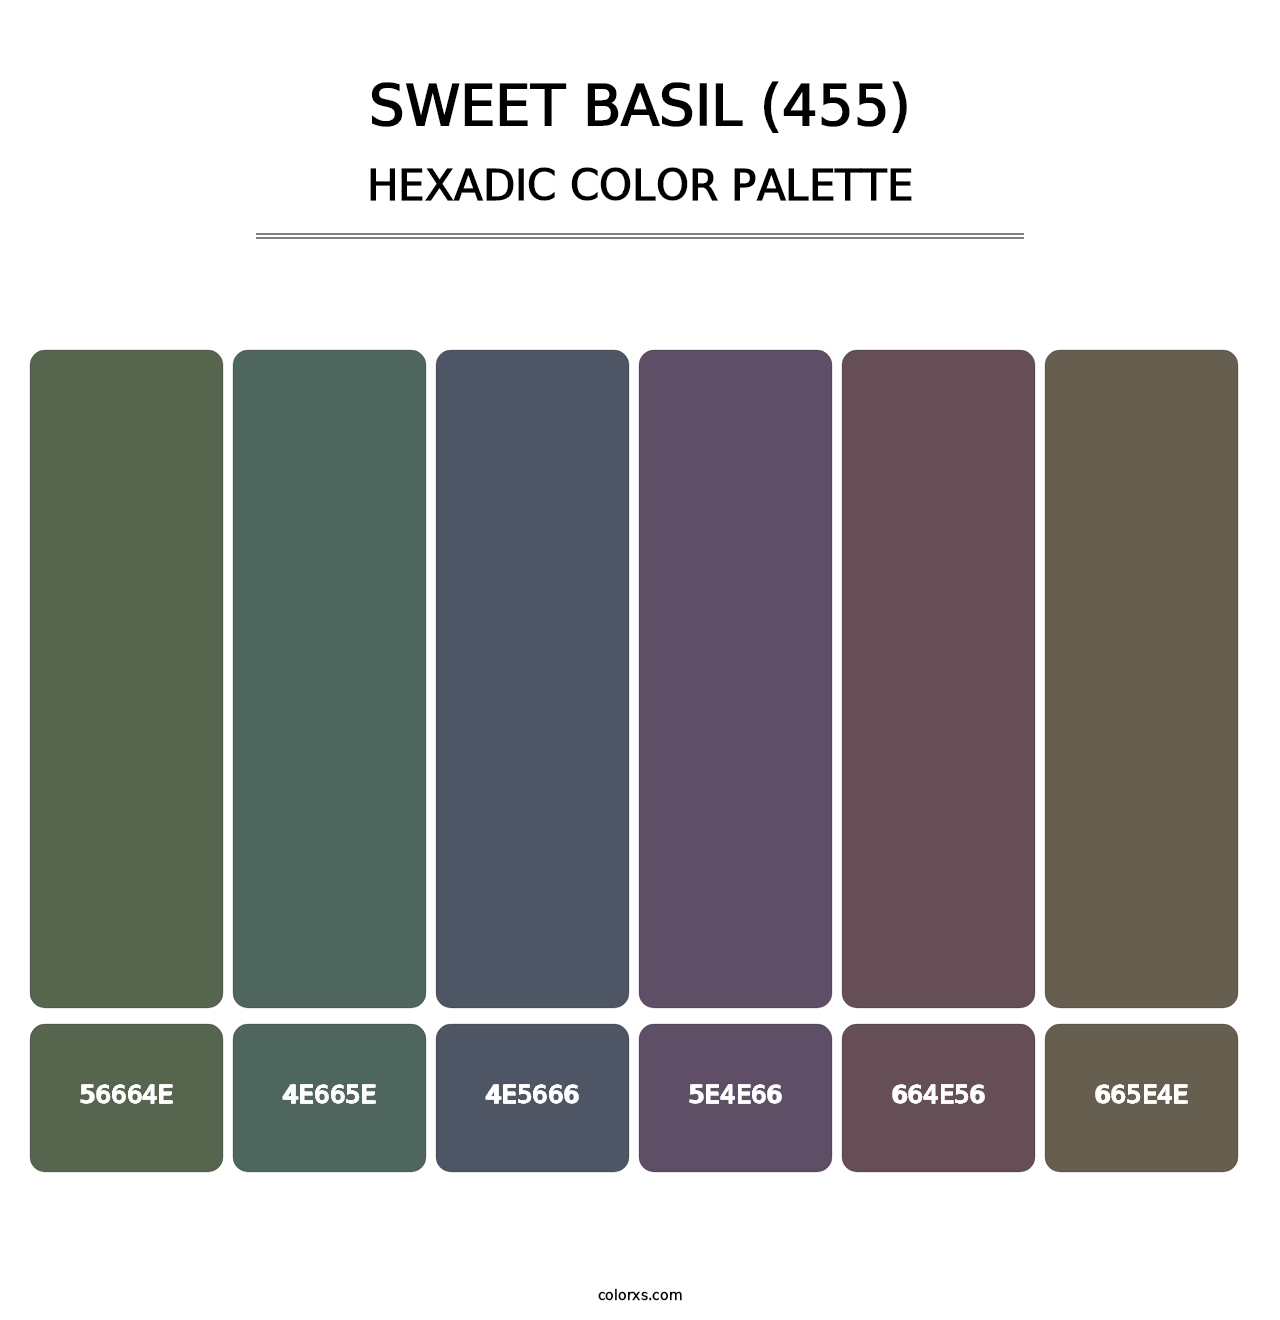 Sweet Basil (455) - Hexadic Color Palette